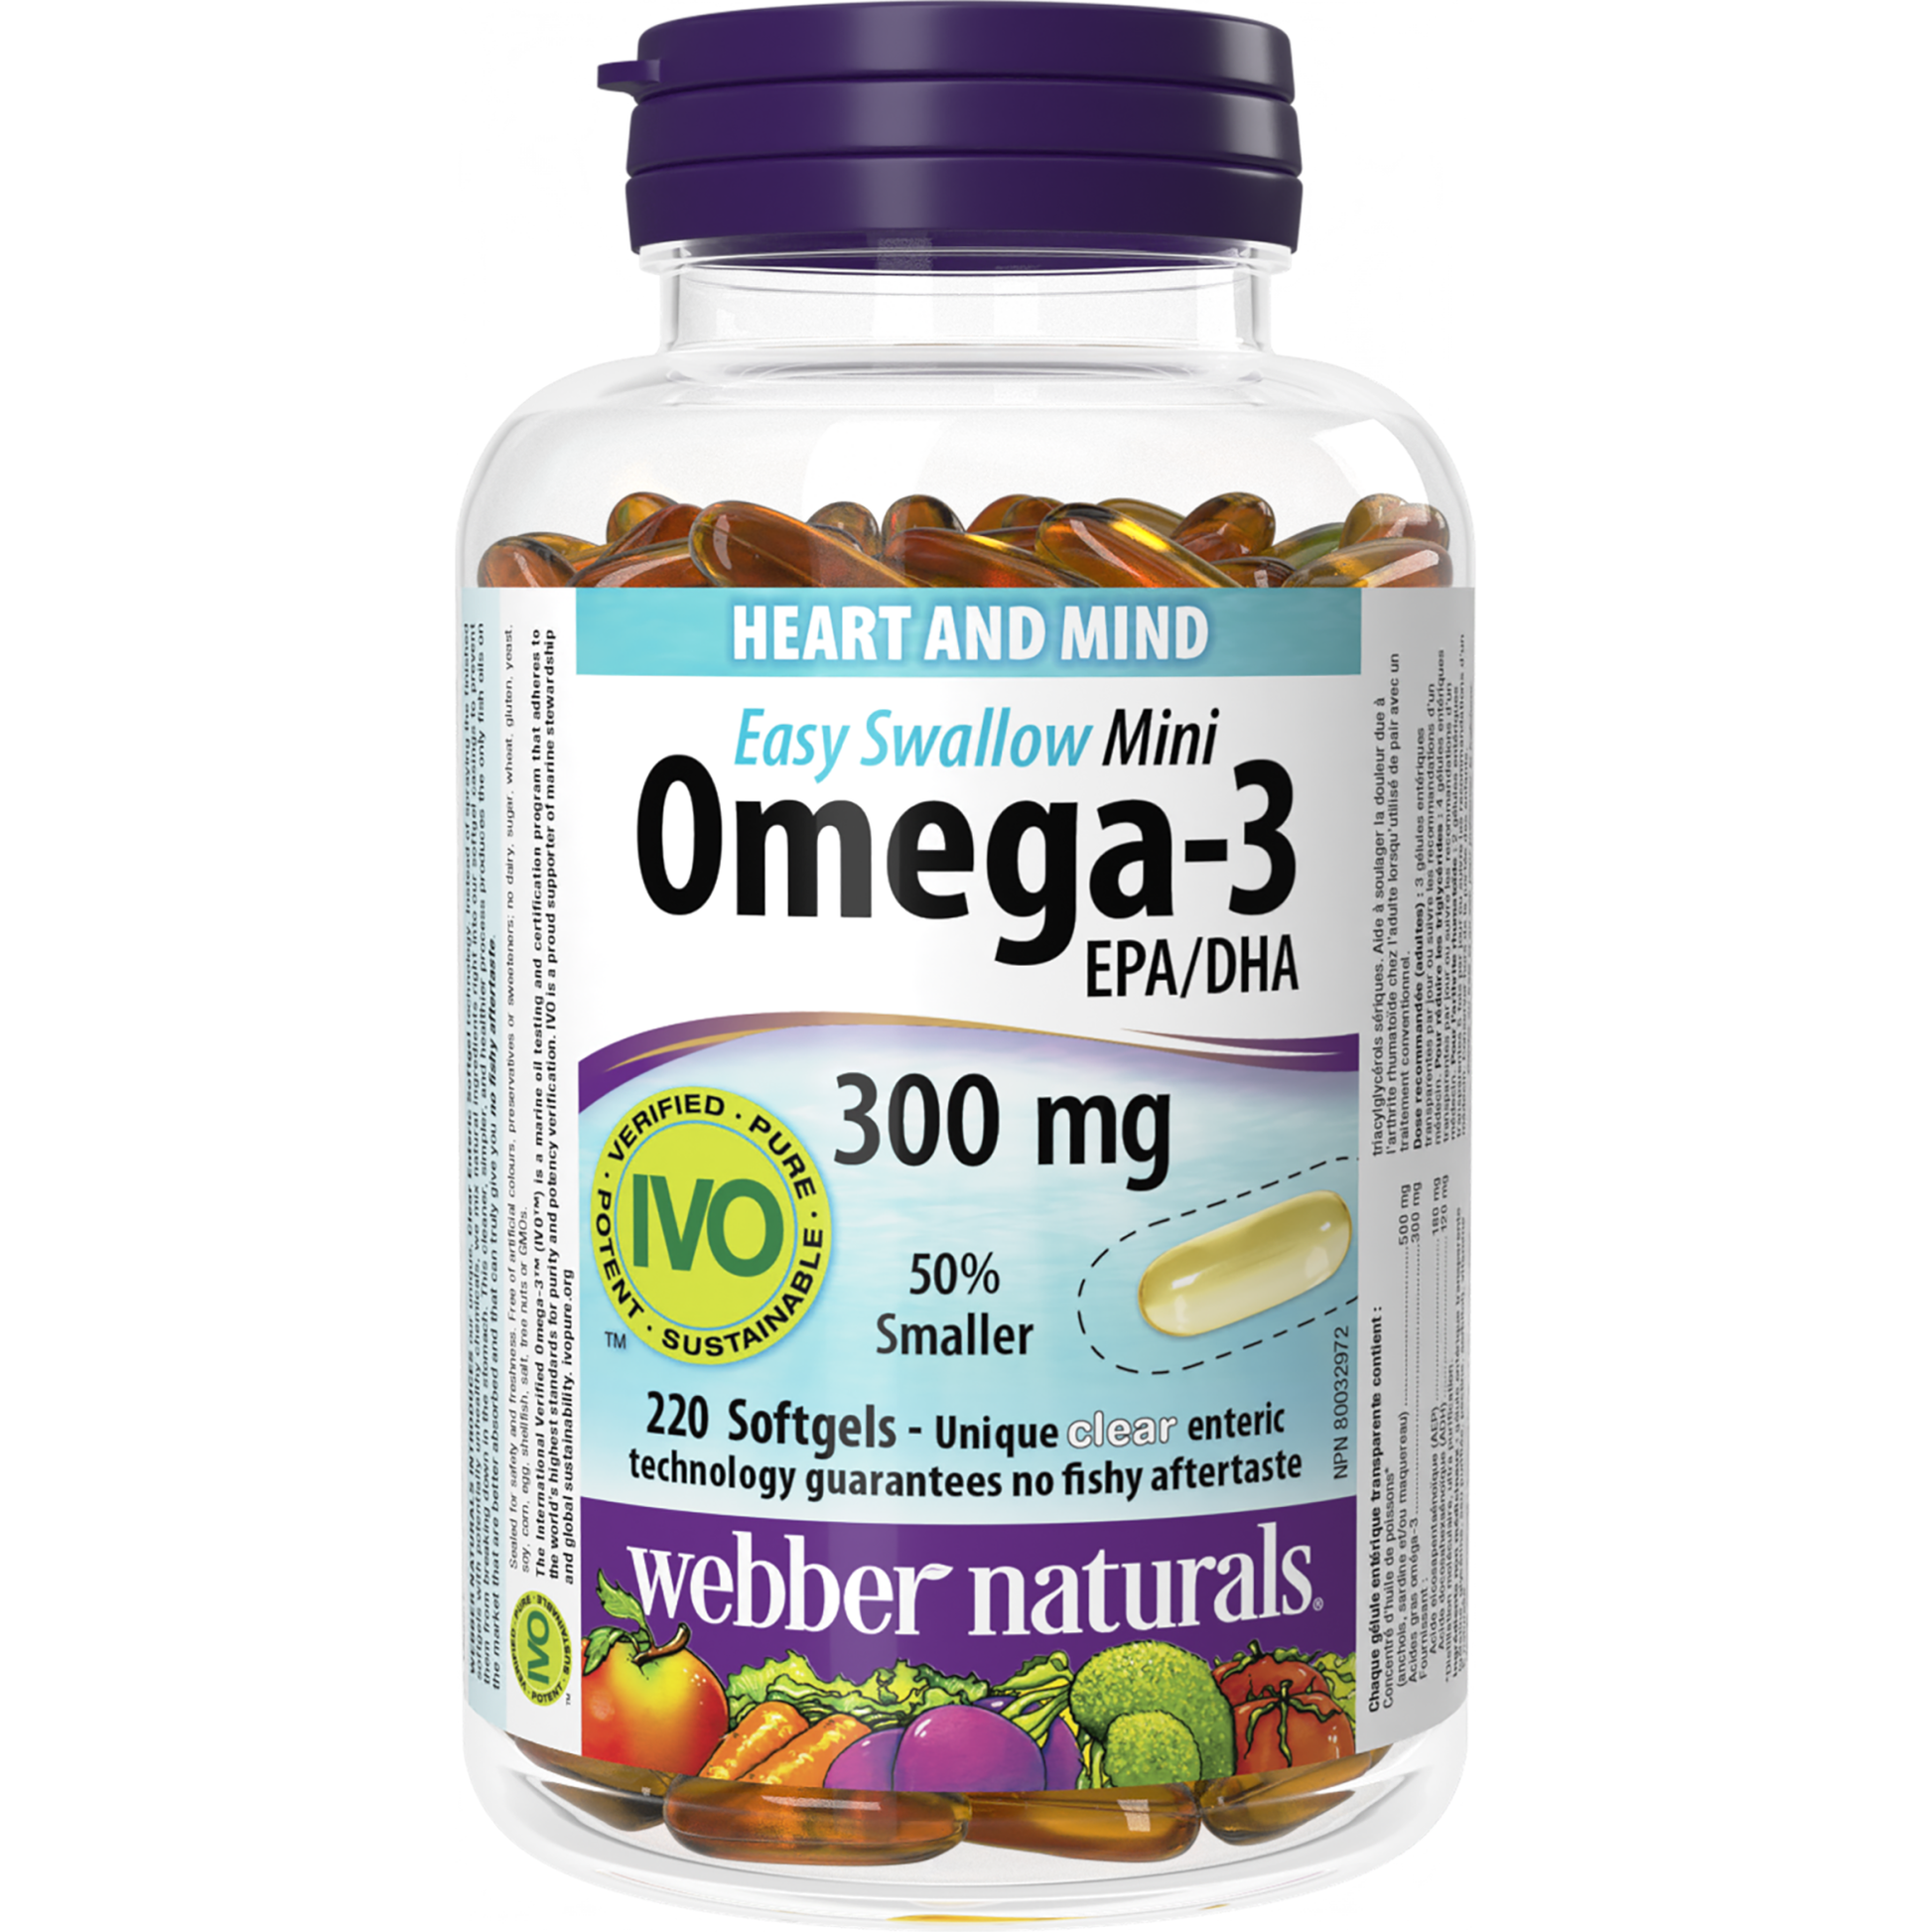 Omega-3 Mini Easy Swallow 300 mg EPA/DHA for Webber Naturals|v|hi-res|WN3393